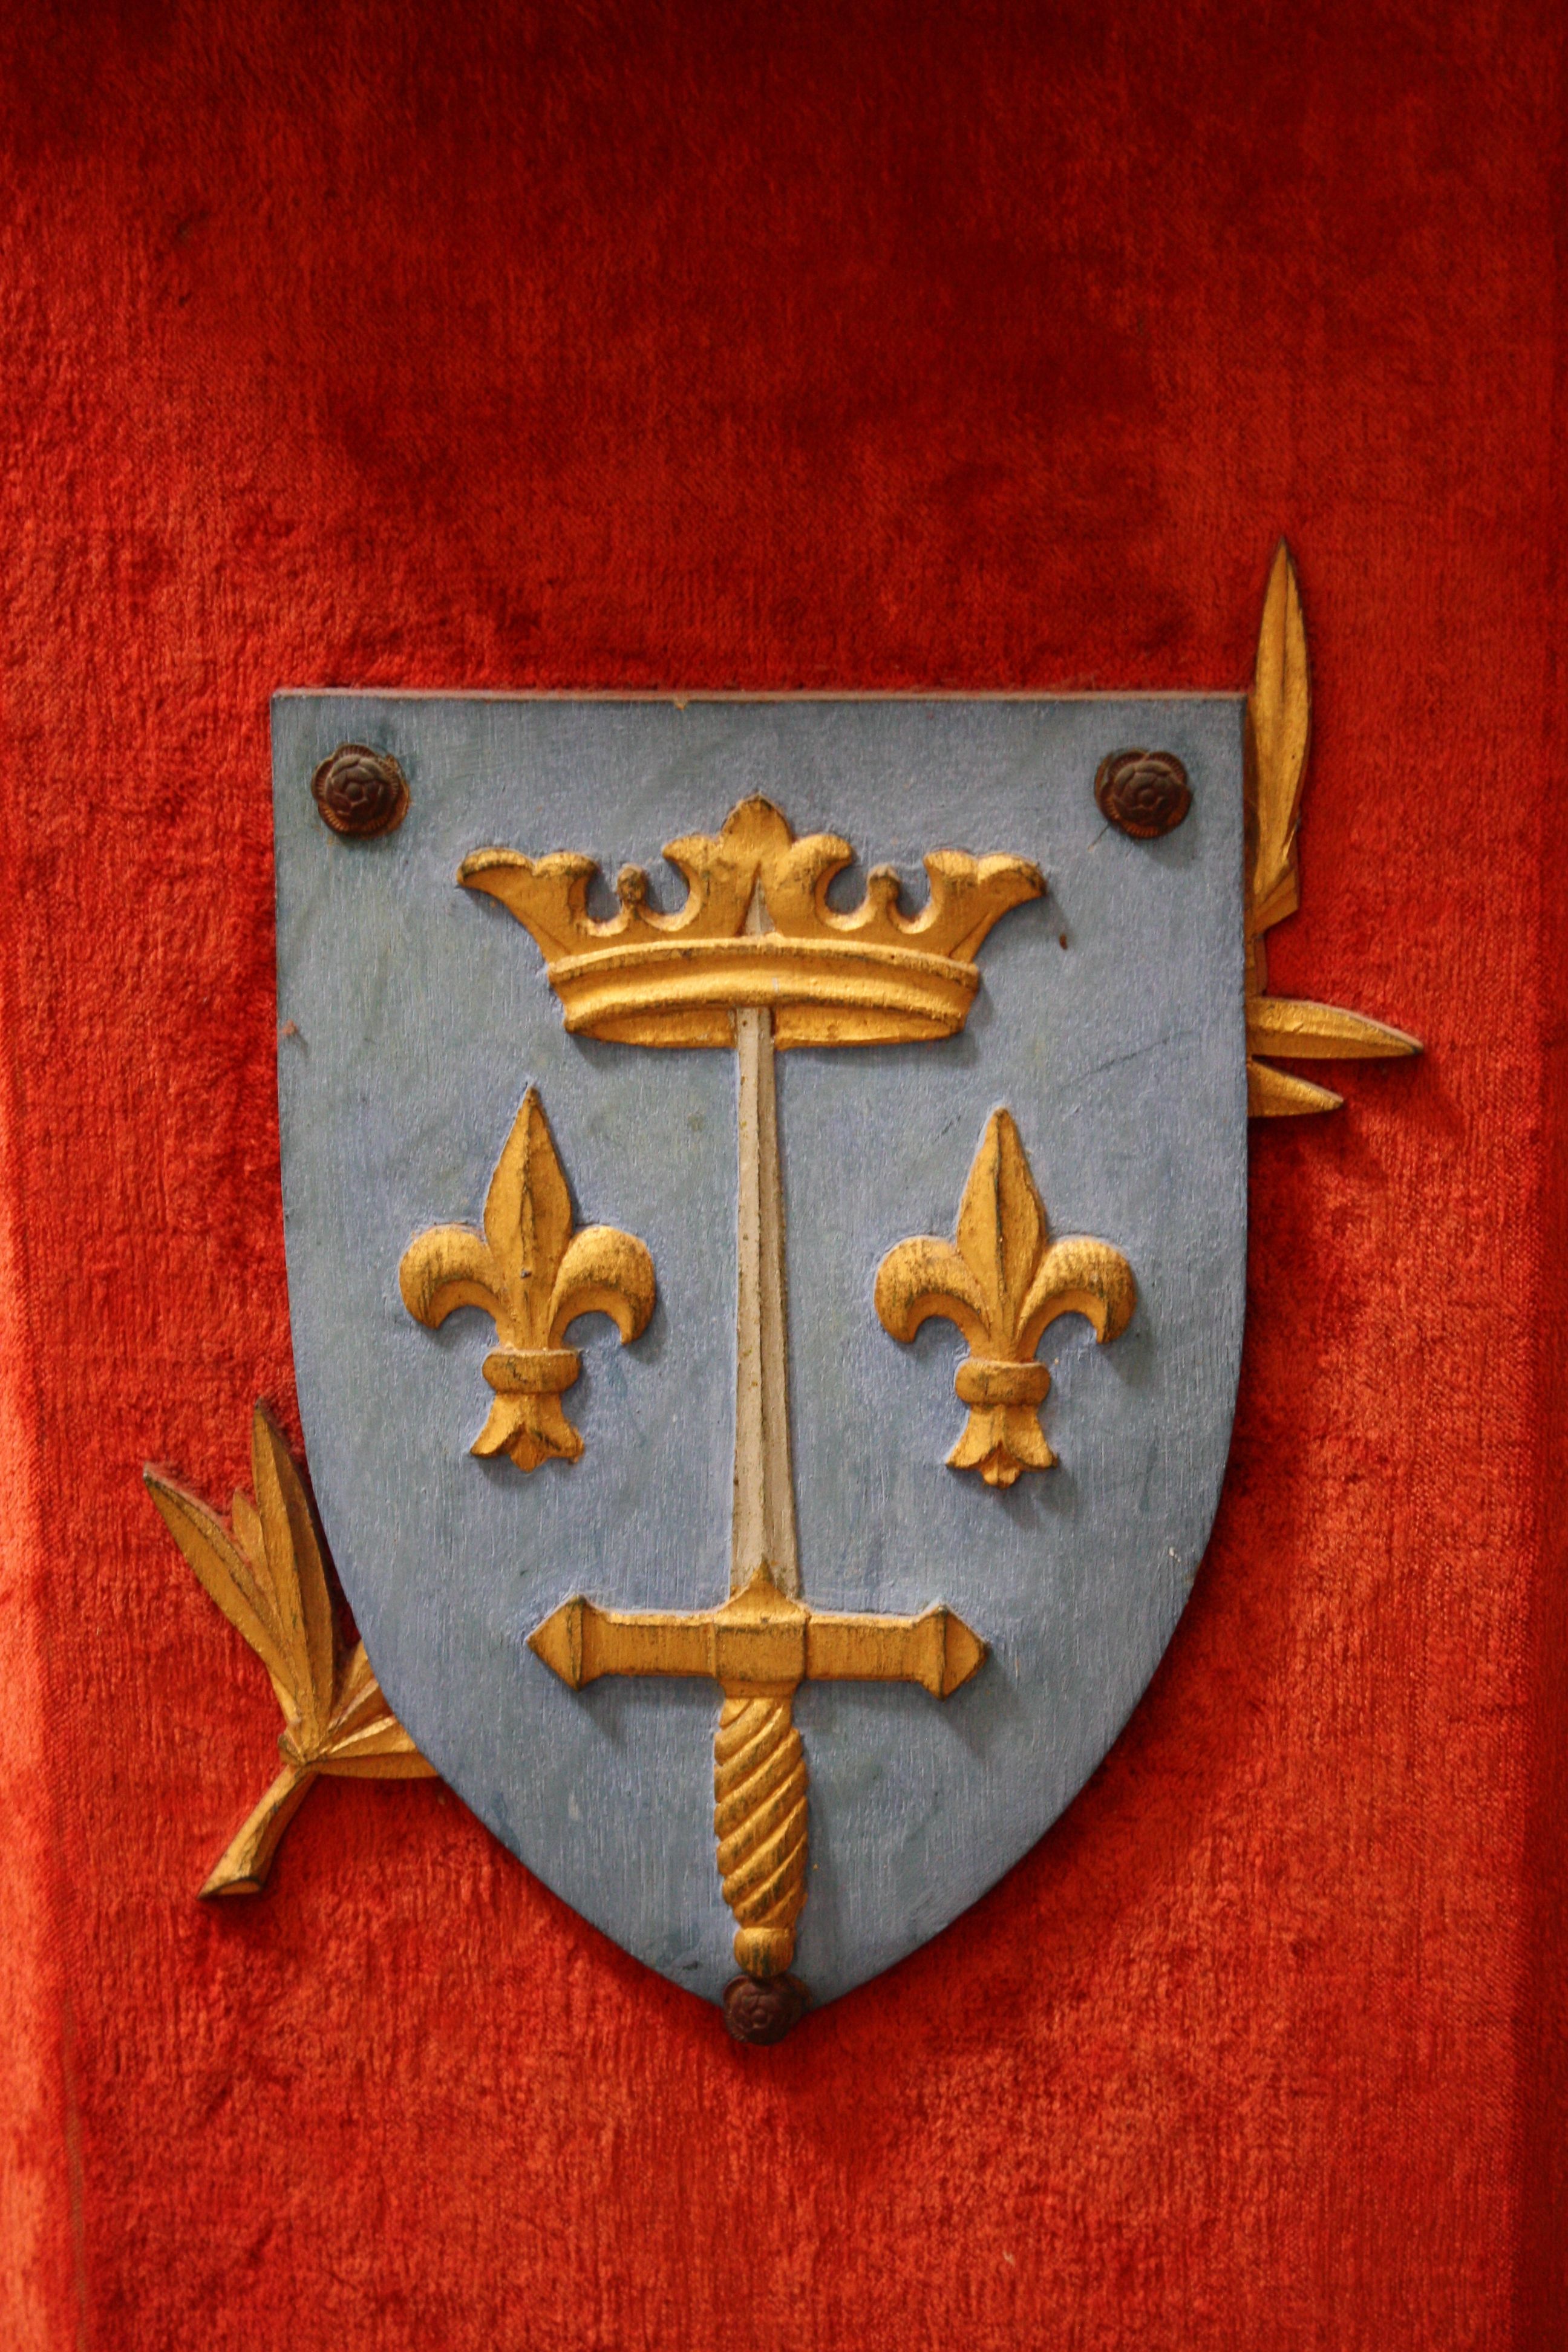 The coat of arms of Joan of Arc (c. 1412 - 1431 CE). Eglise de la Trinite, Vendome, France.